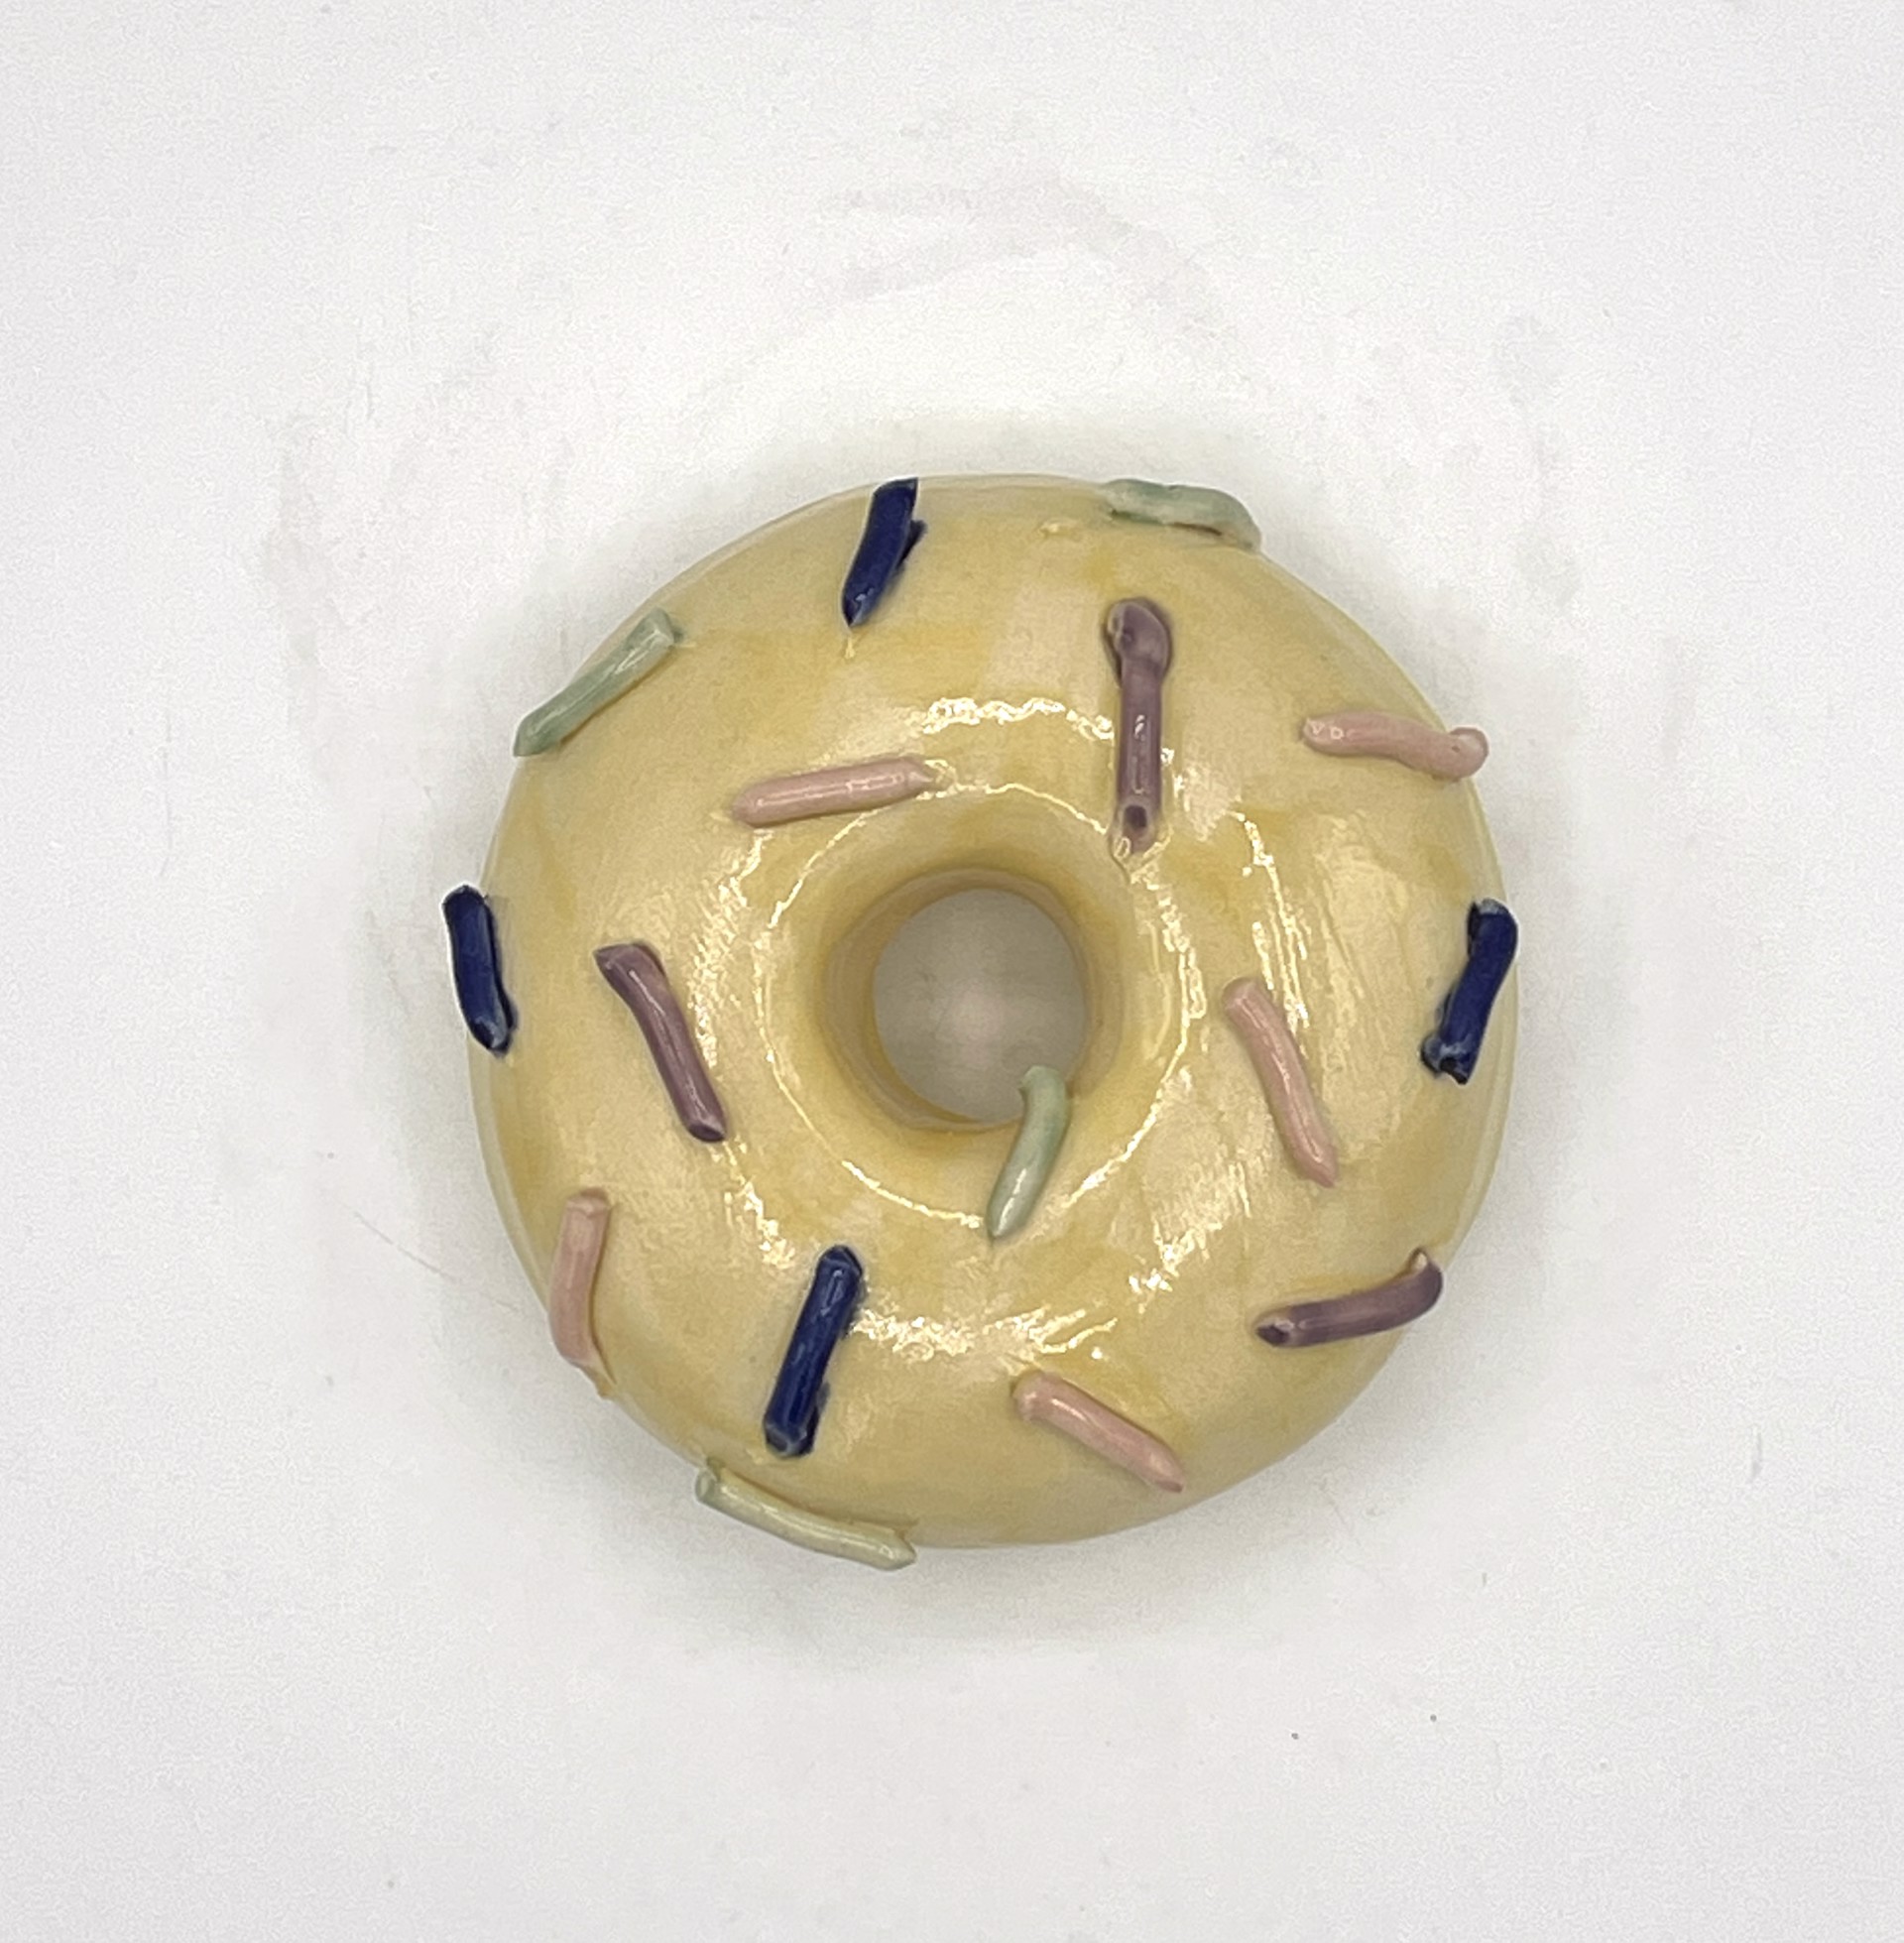 Lemon Donut with Rainbow Sprinkles by Liv Antonecchia